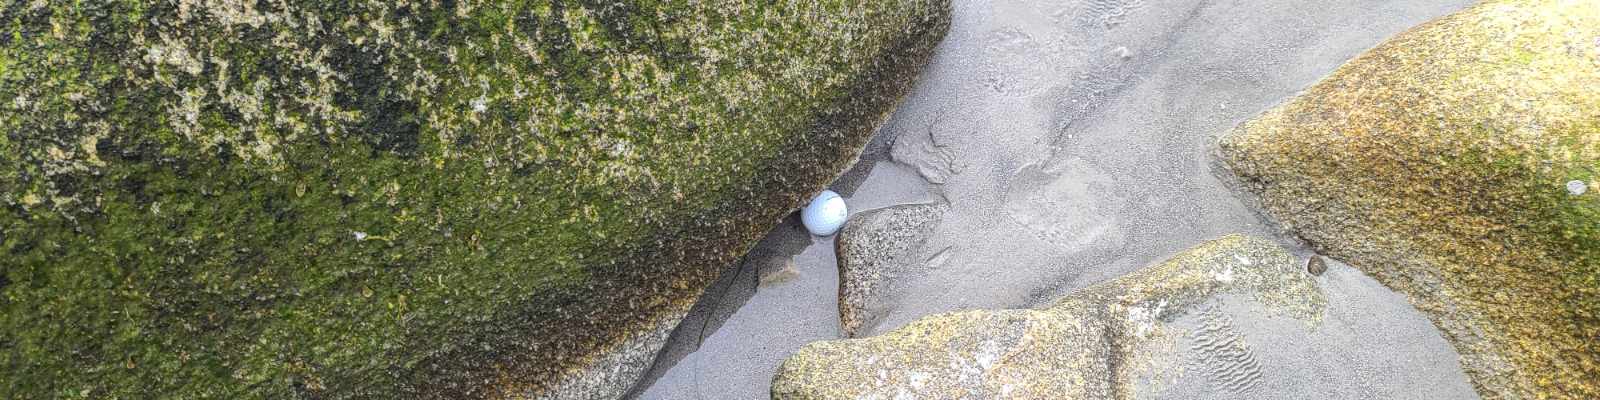 Golfball im Fluss (photo by Patrick Hatt / Shutterstock.com)